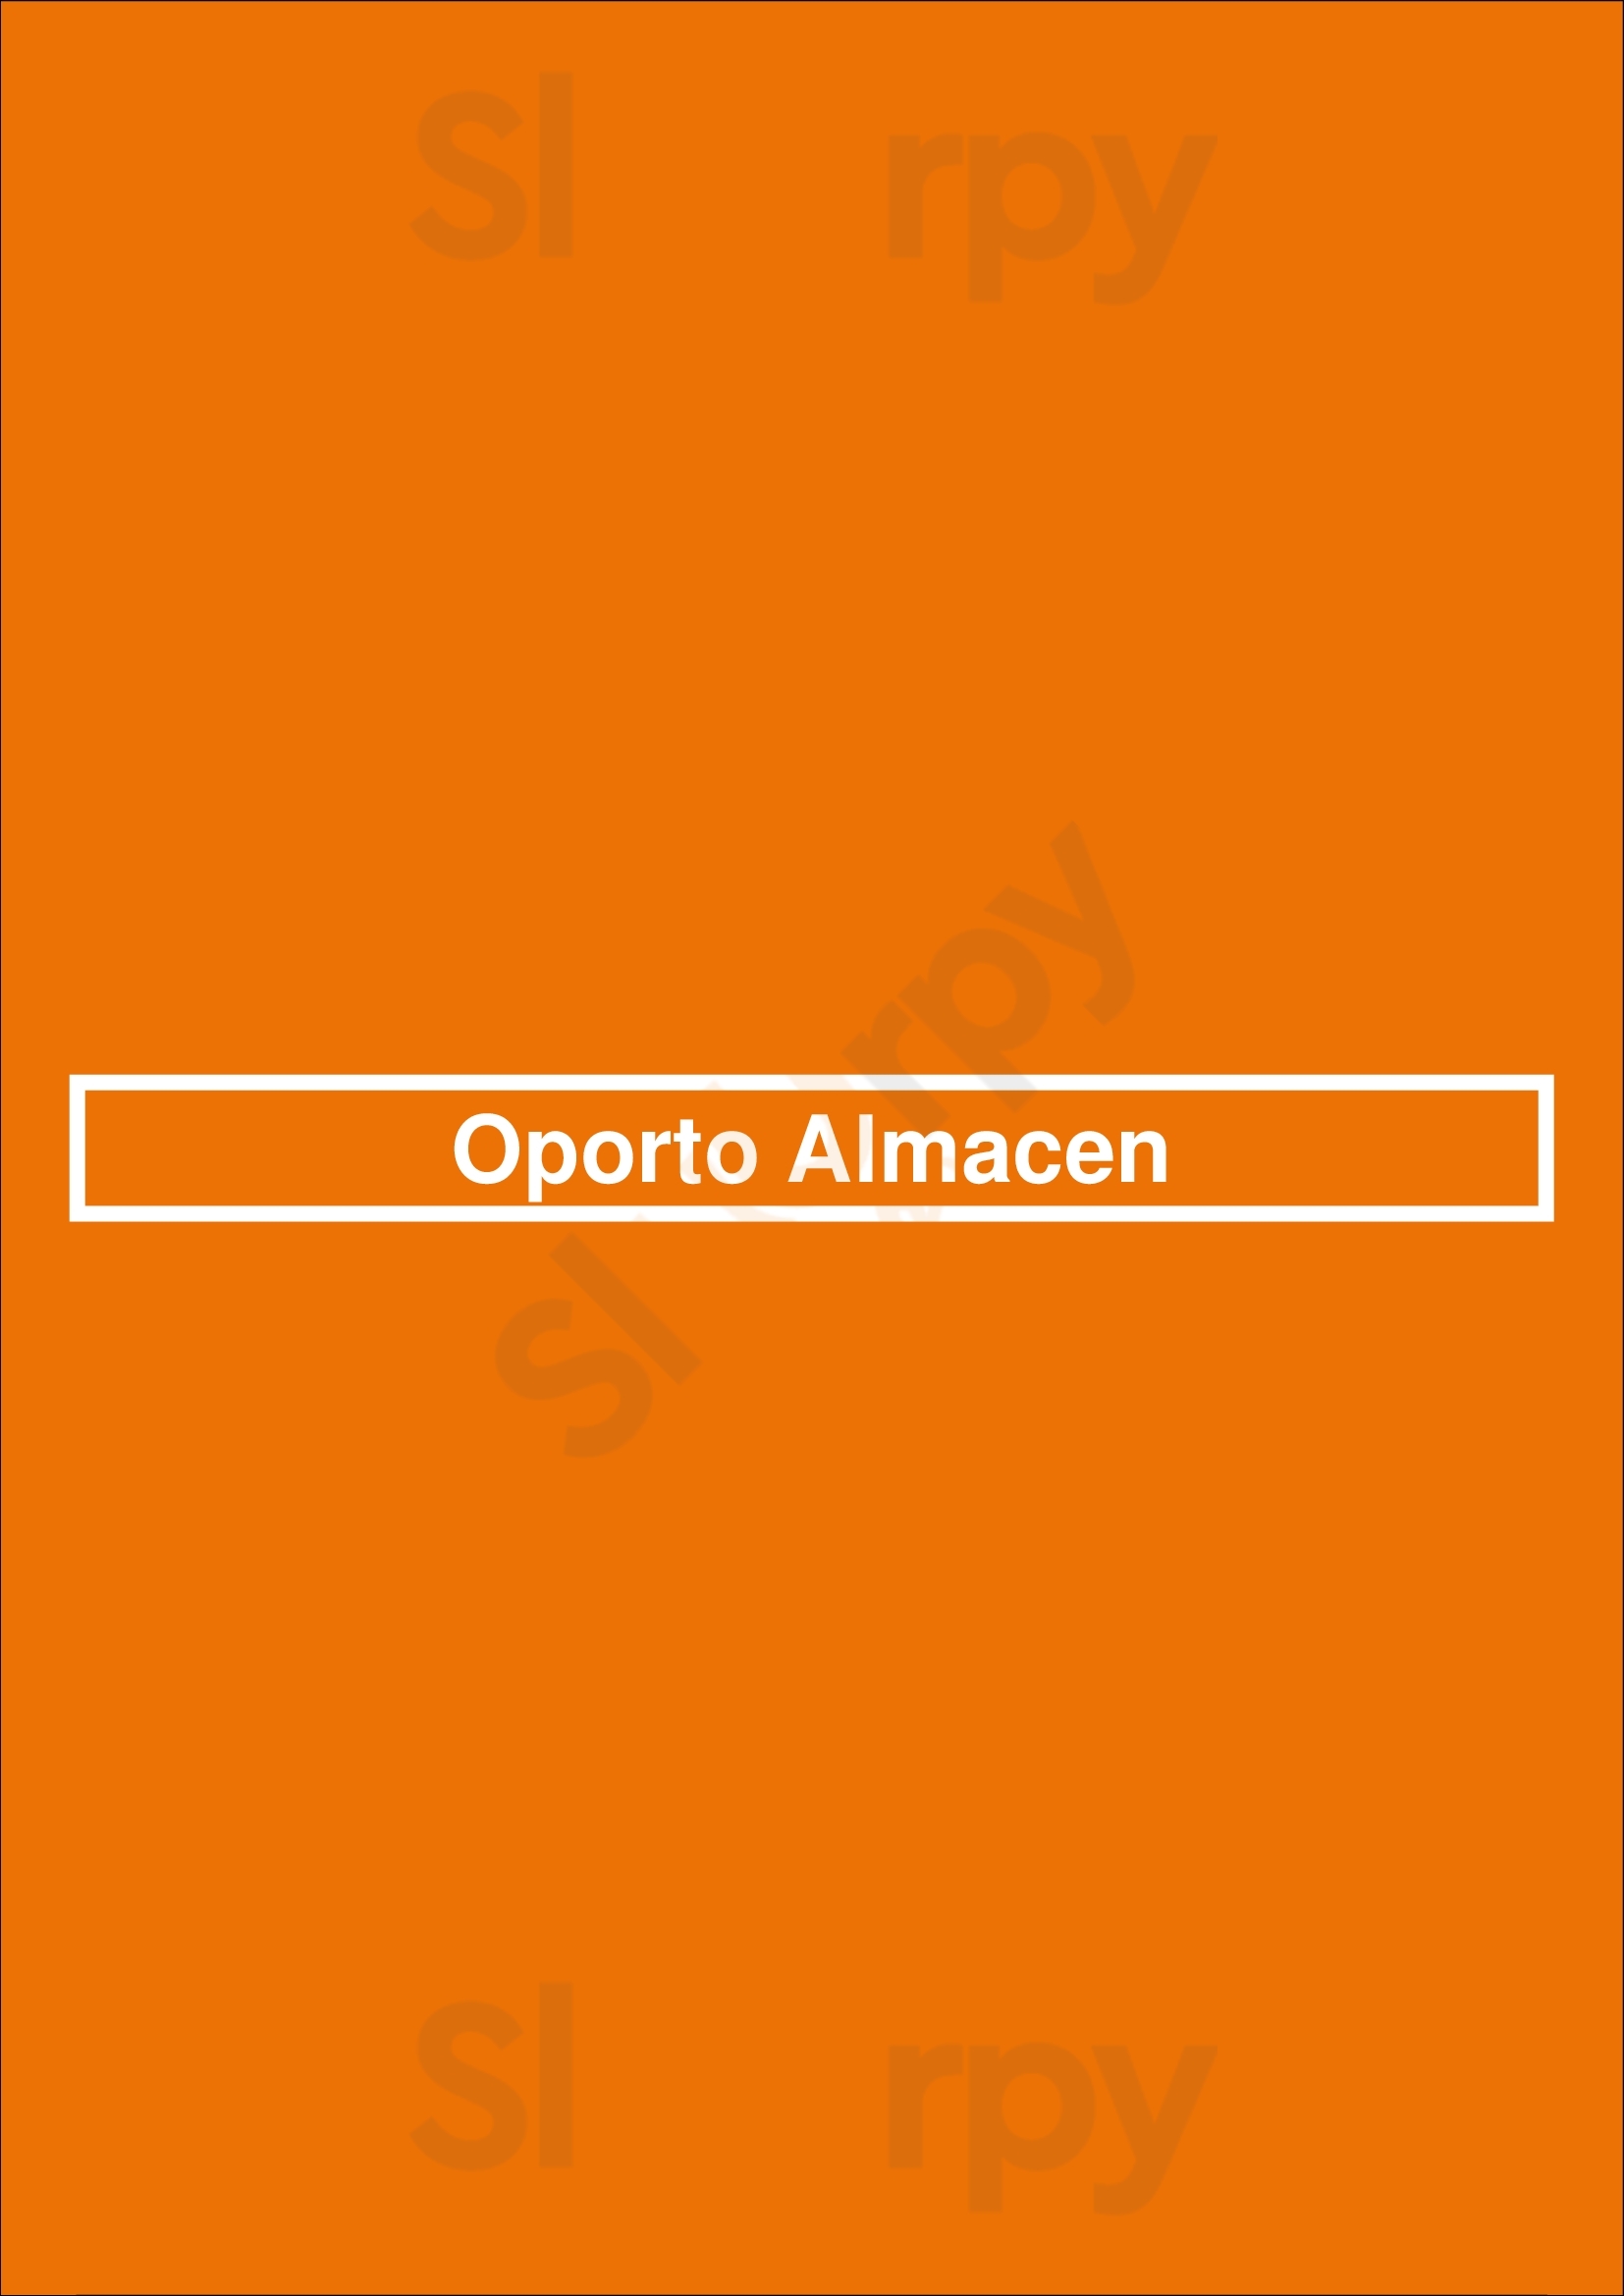 Oporto Almacen Buenos Aires Menu - 1